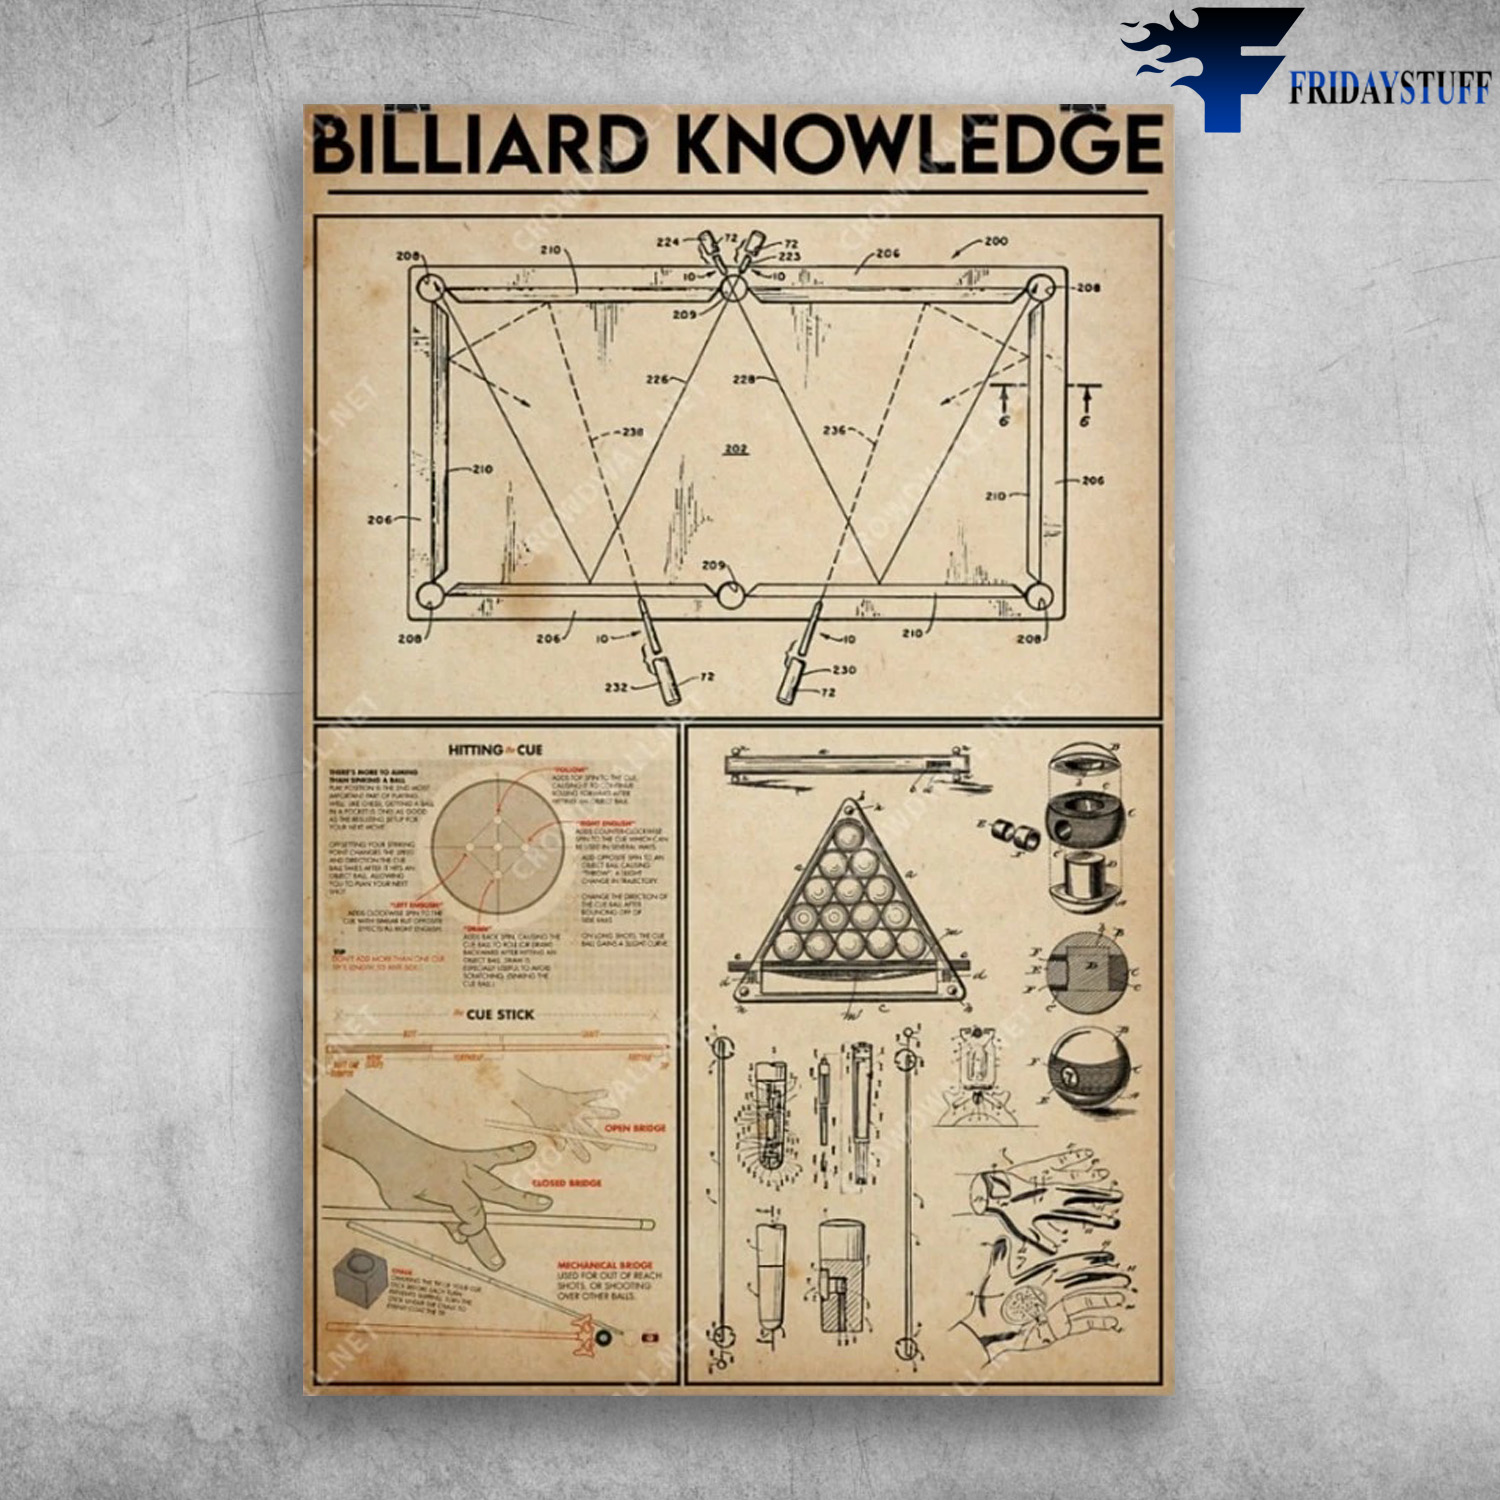 Lilliard Knowledge - Hitting - Cue, Cue Stick, Mechancal Sedoor, Mechanical Bridge